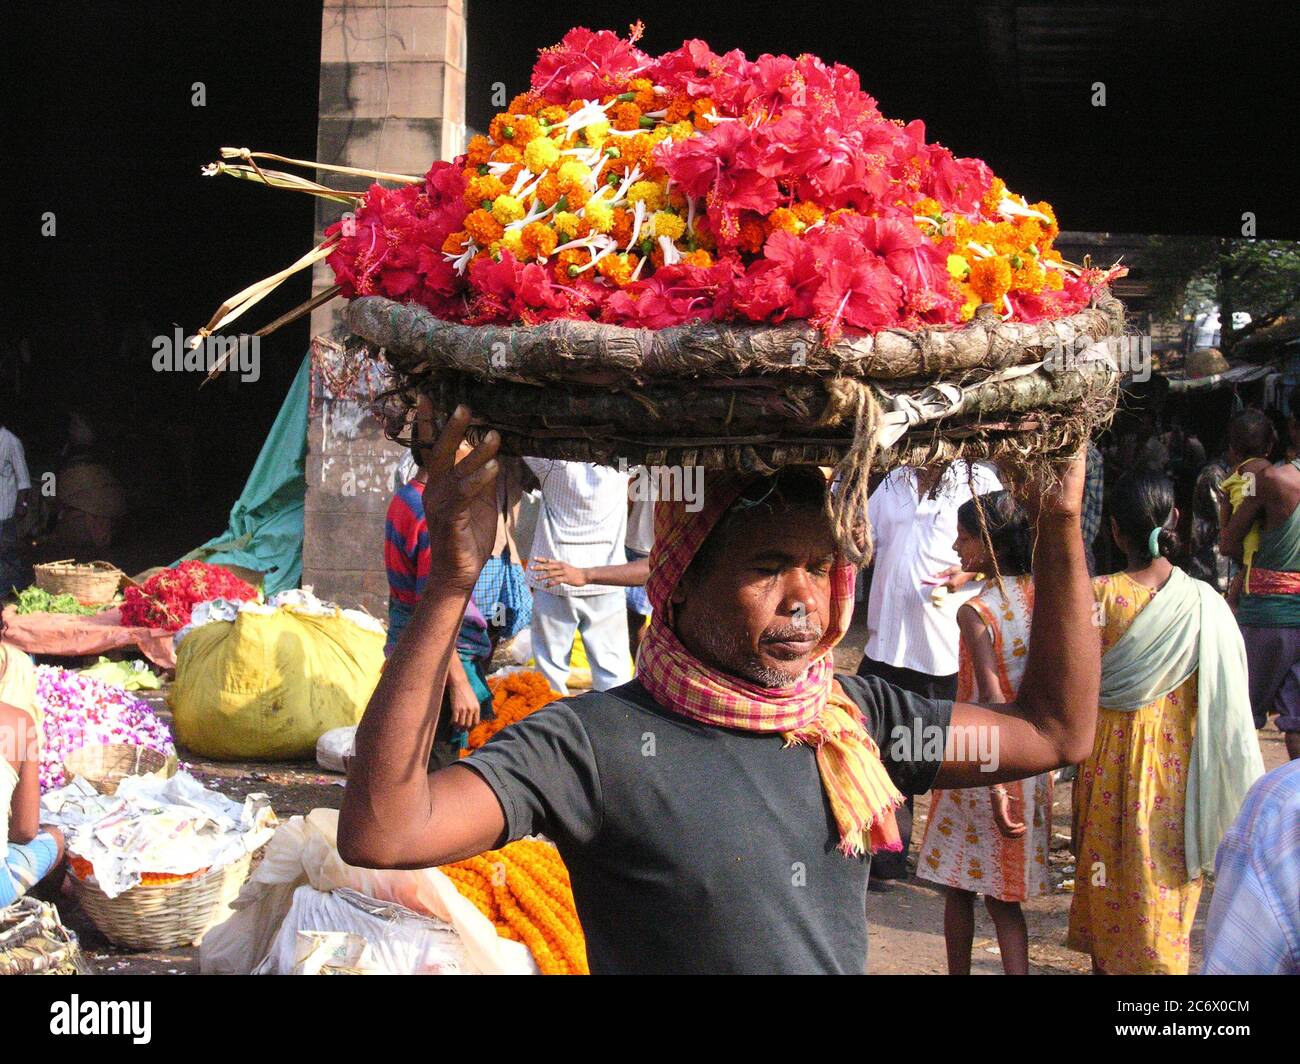 A vendor at the Mullickghaat flower market, one of the oldest flower markets in Kolkata, India. November 5, 2007. Stock Photo